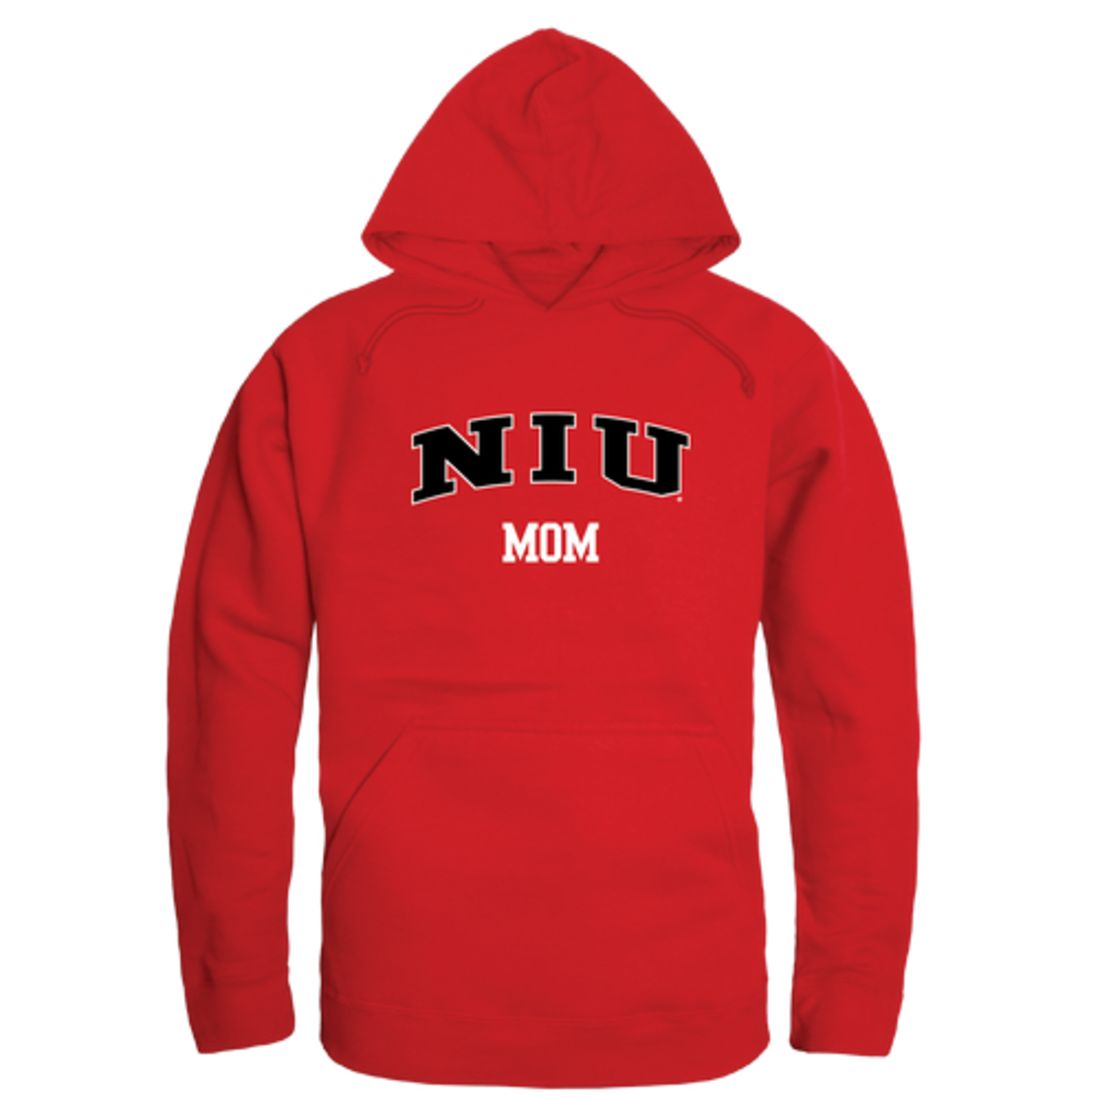 NIU Northern Illinois University Huskies Mom Fleece Hoodie Sweatshirts Heather Grey-Campus-Wardrobe